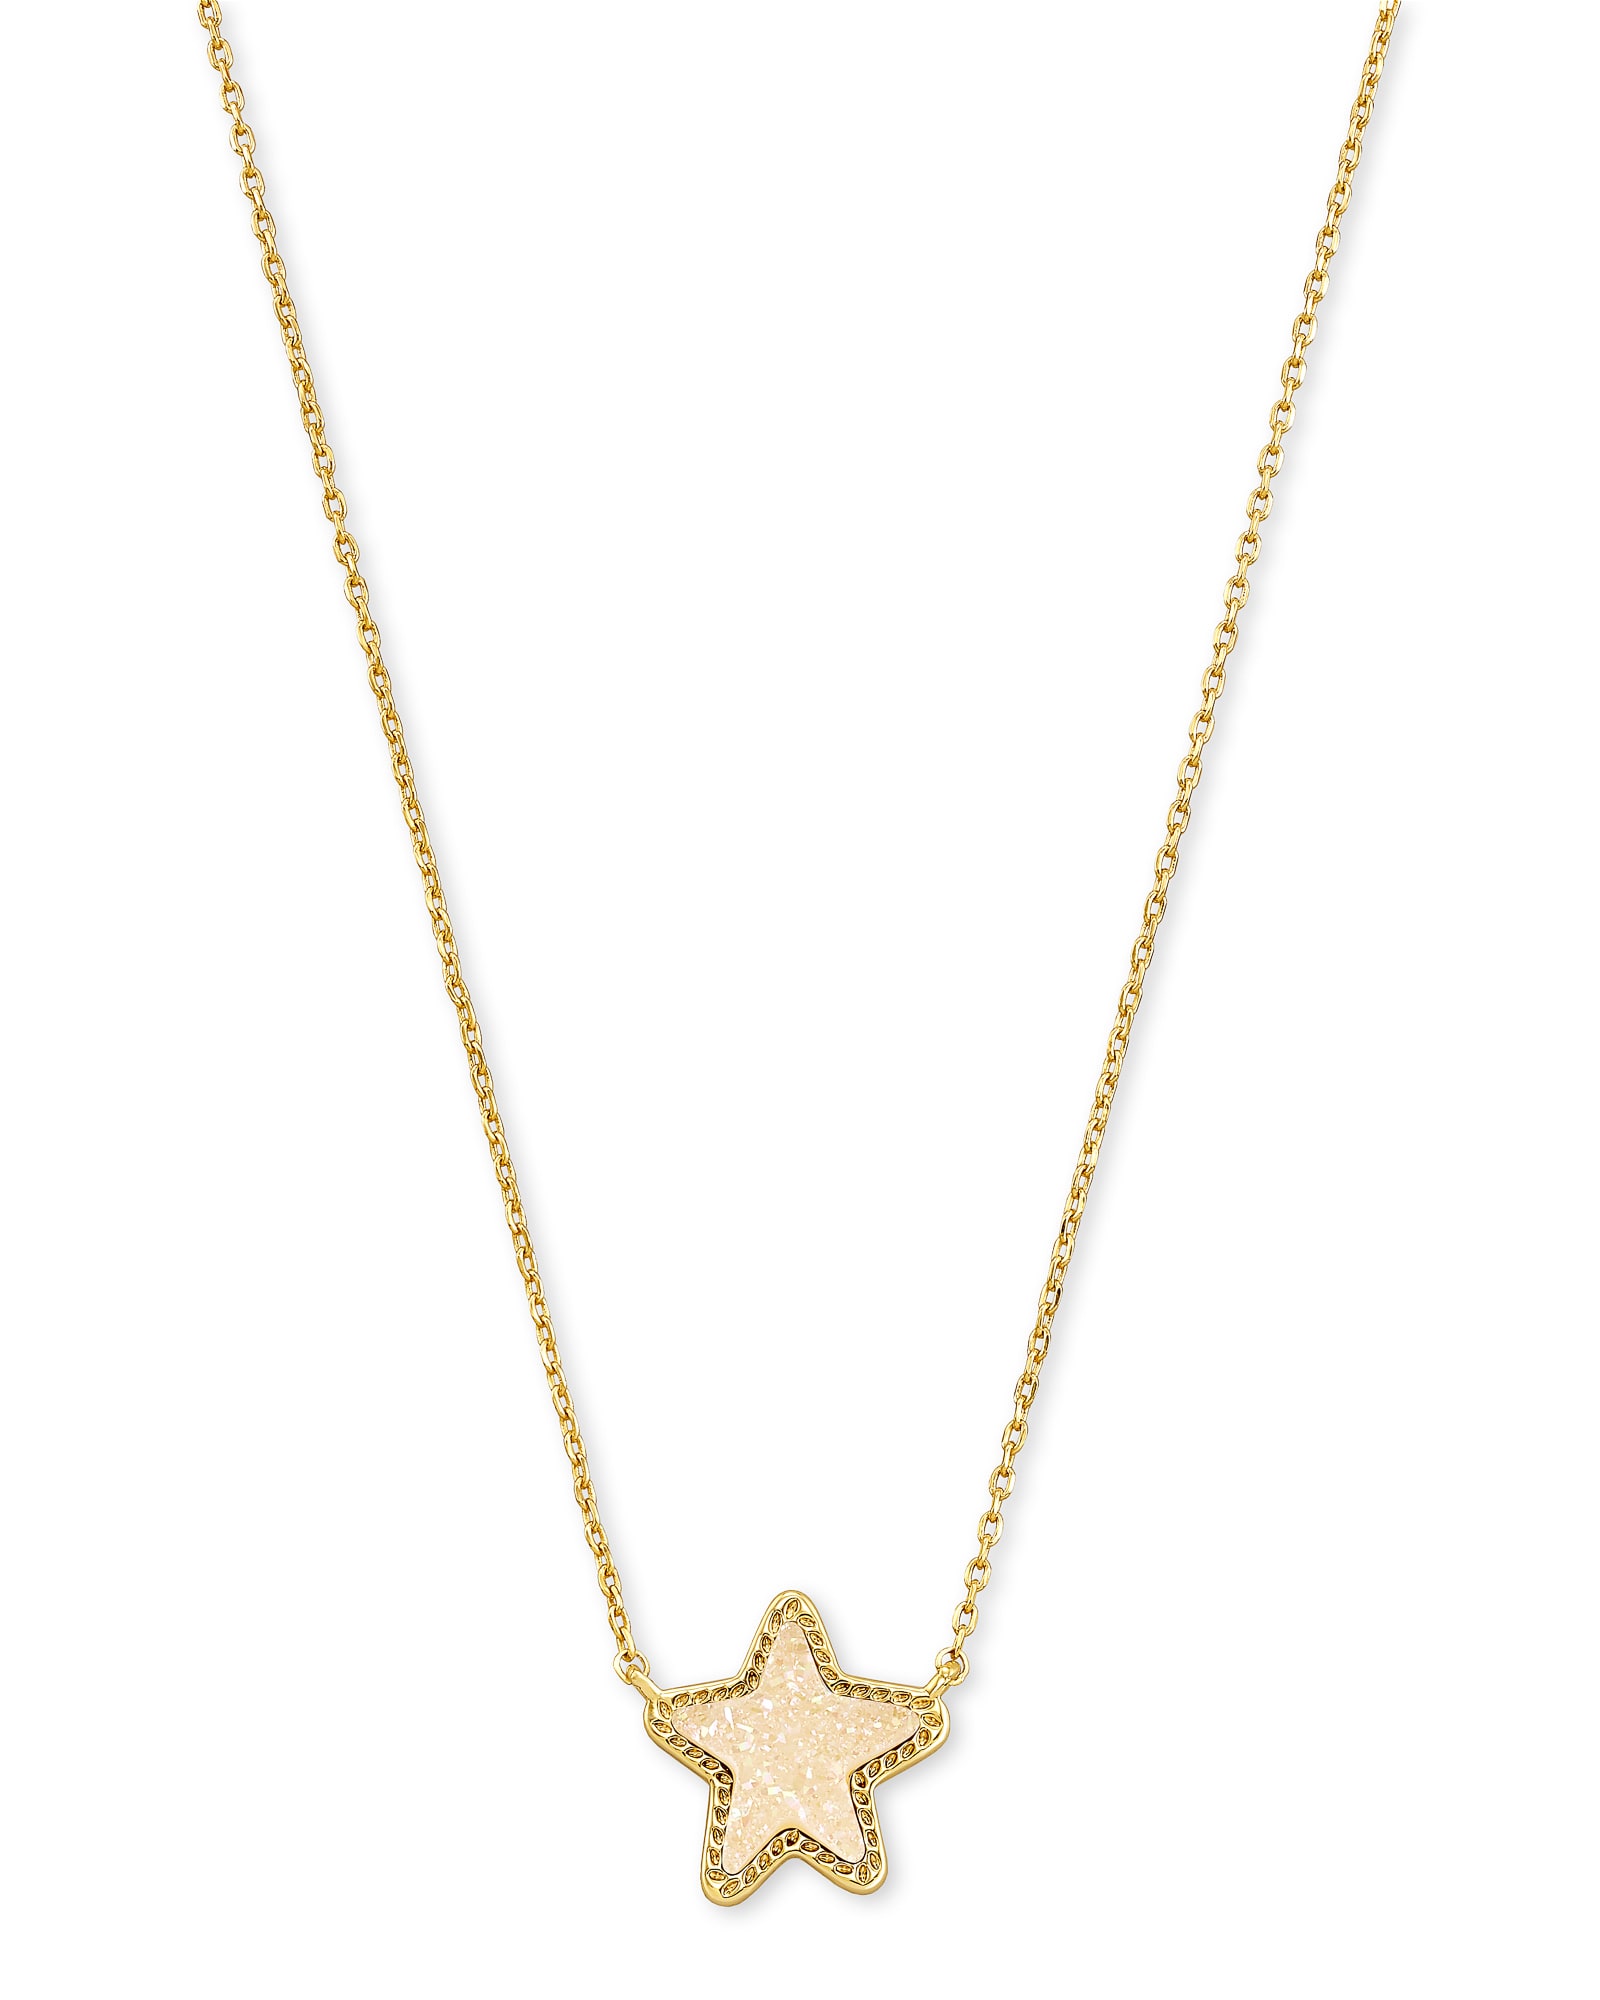 Kendra Scott Jae Star Gold Pendant Necklace in Iridescent | Drusy